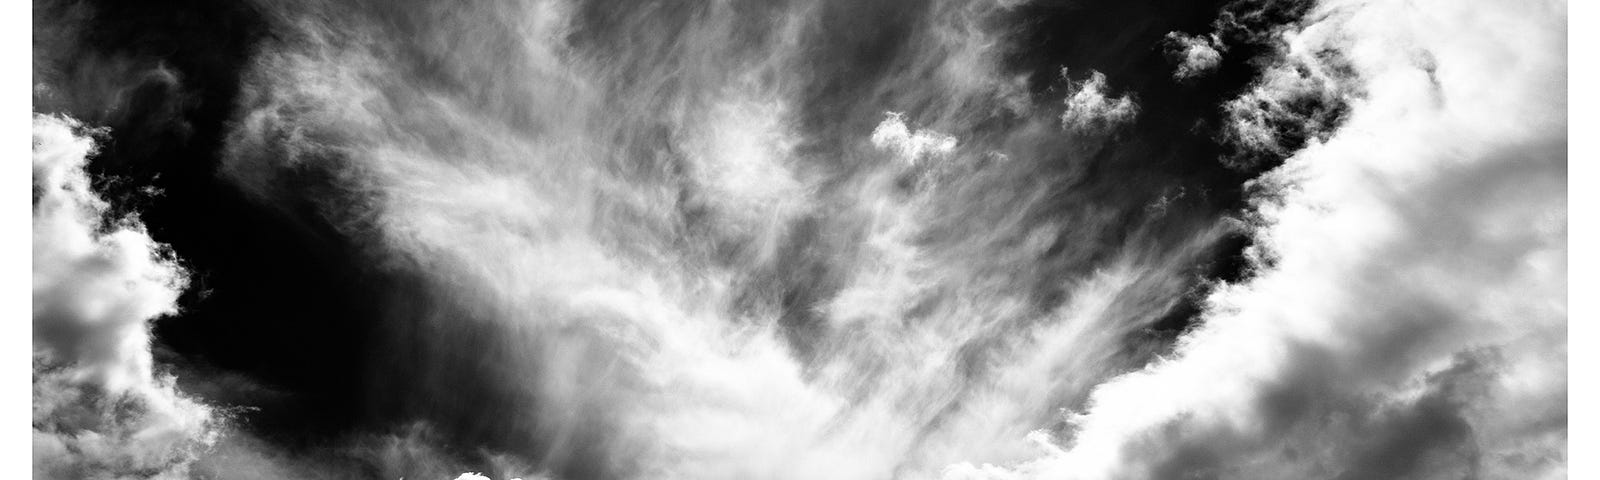 Title Fine art cloud photography contemporary daylight (7)
 Fine Art Cloud Photographer
 Contemporary Cloud Photography By Visual Contemporary Fine Artist Photographer Robert Ireland